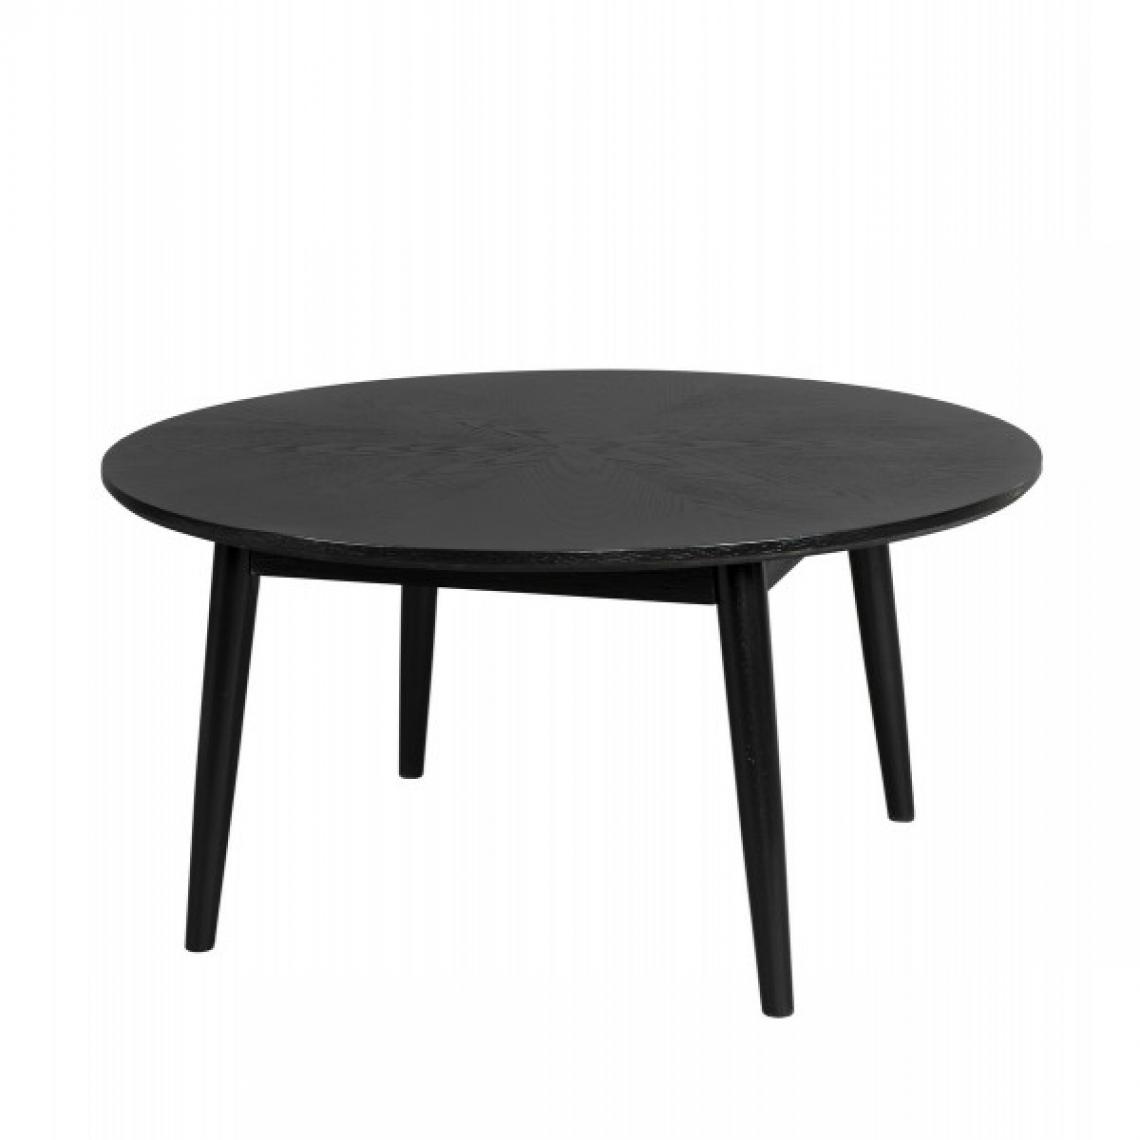 Mathi Design - FAB - Table basse en bois noir - Tables basses